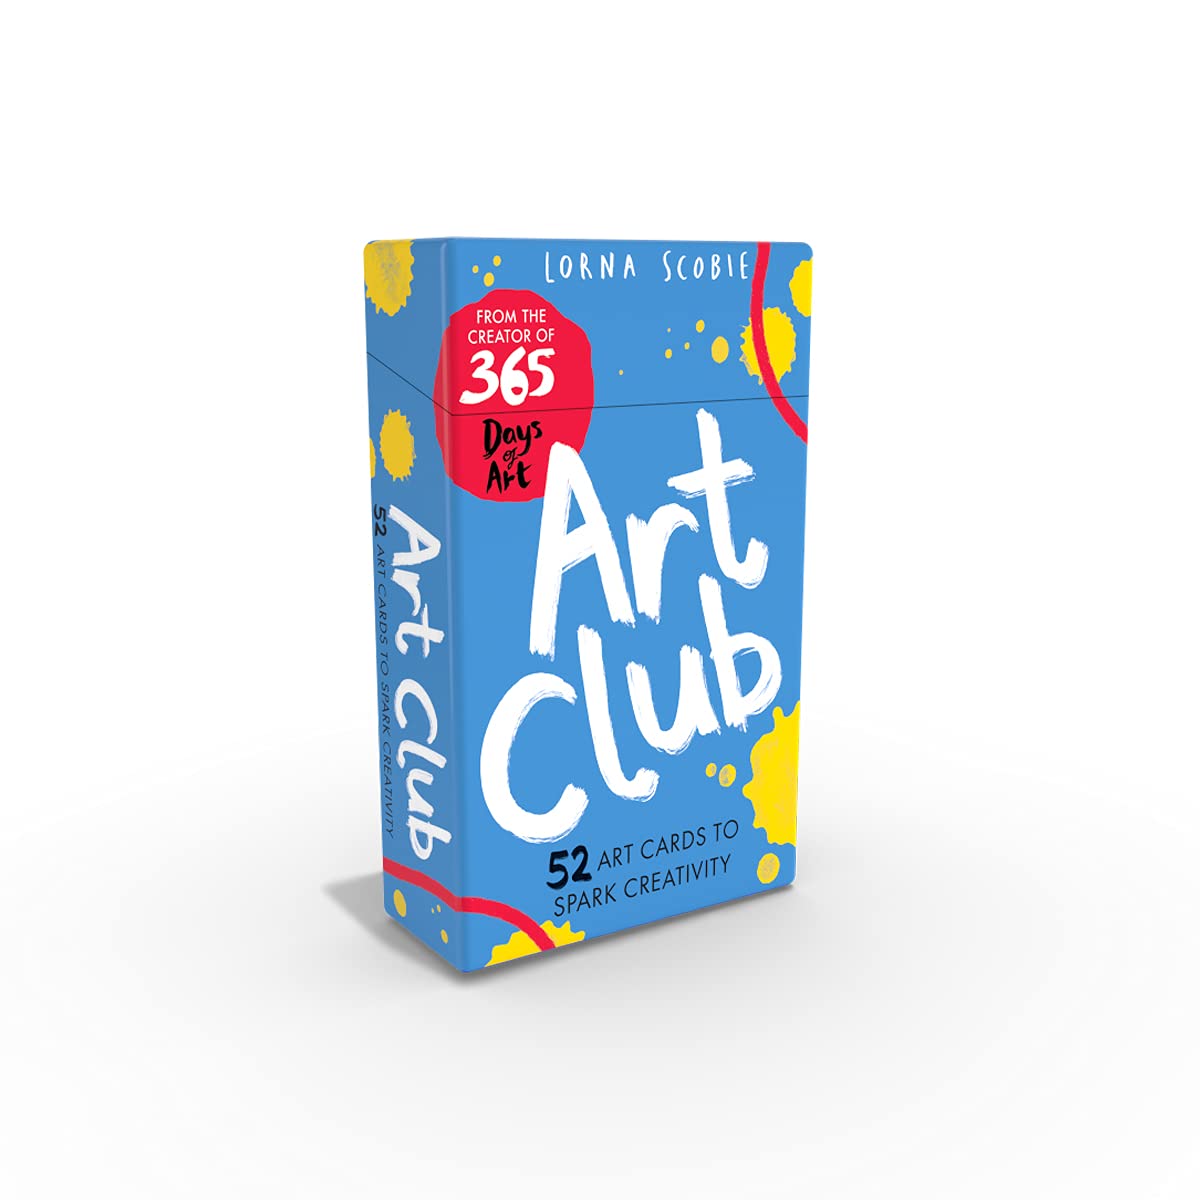 Art Club: 52 Art Card to Spark Creativity